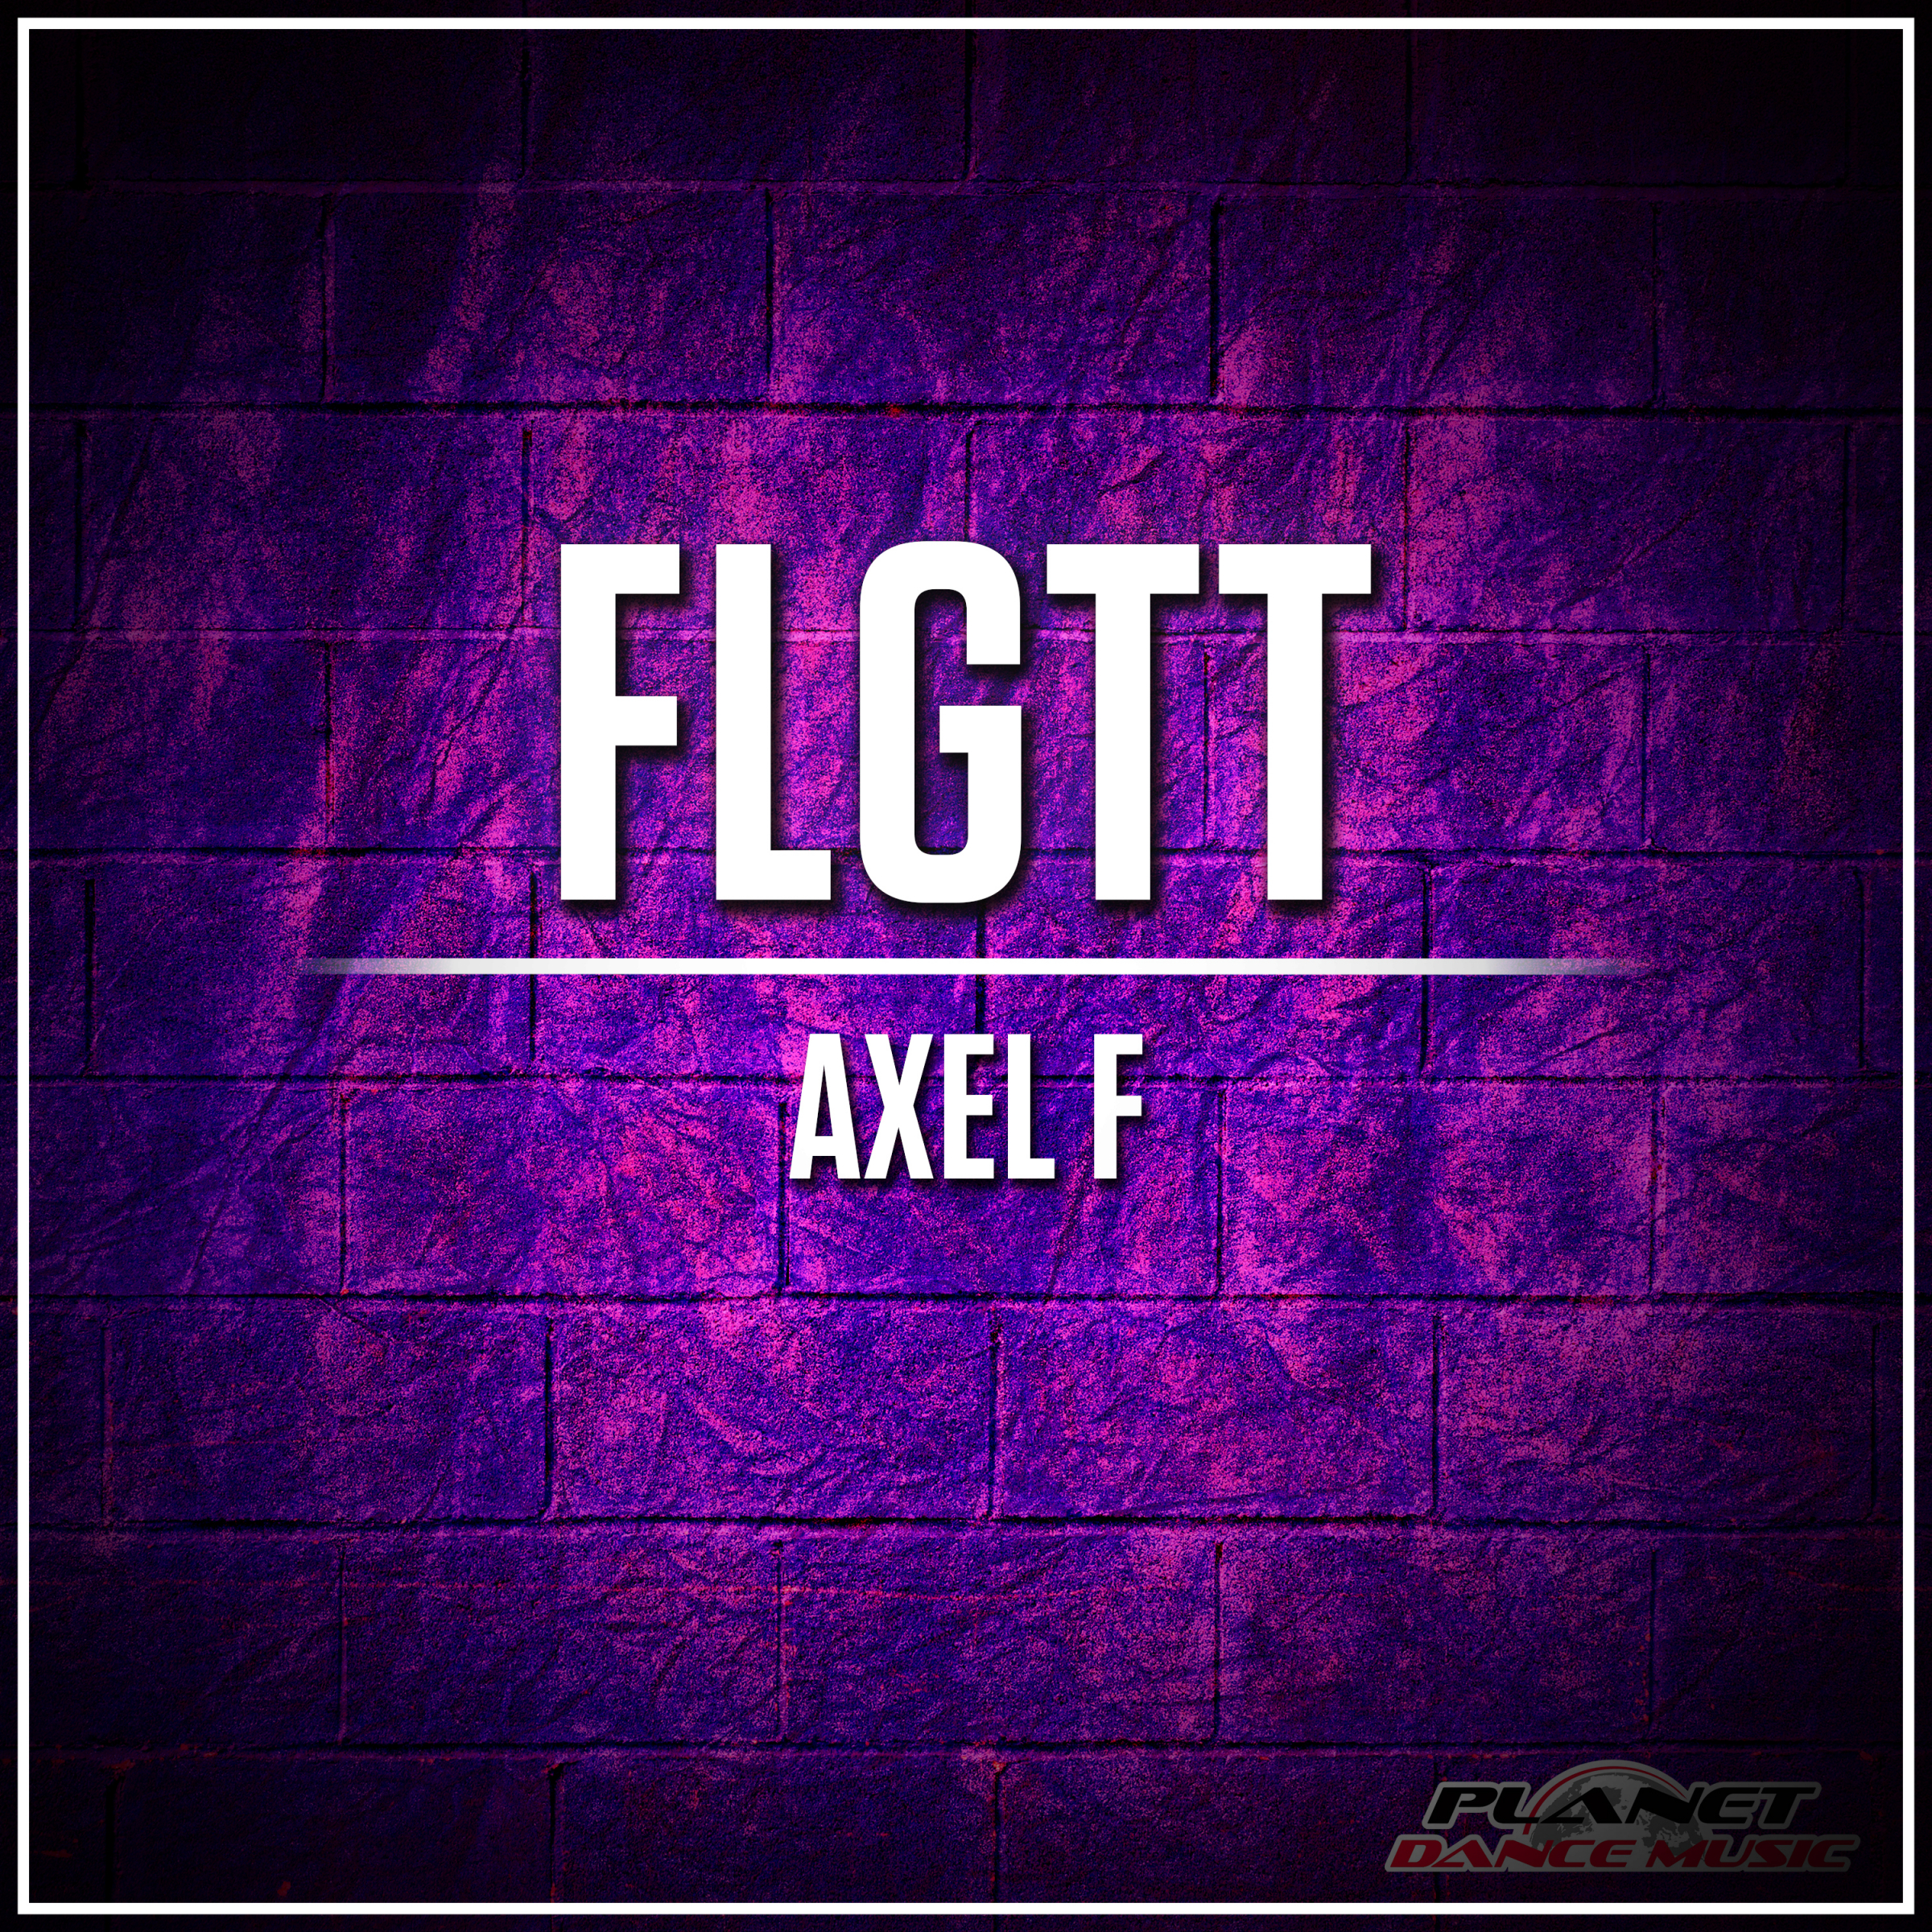 Axel f remix. FLGTT - Axel f. FLGTT. Картинки FLGTT. Altego Axel f обложки.